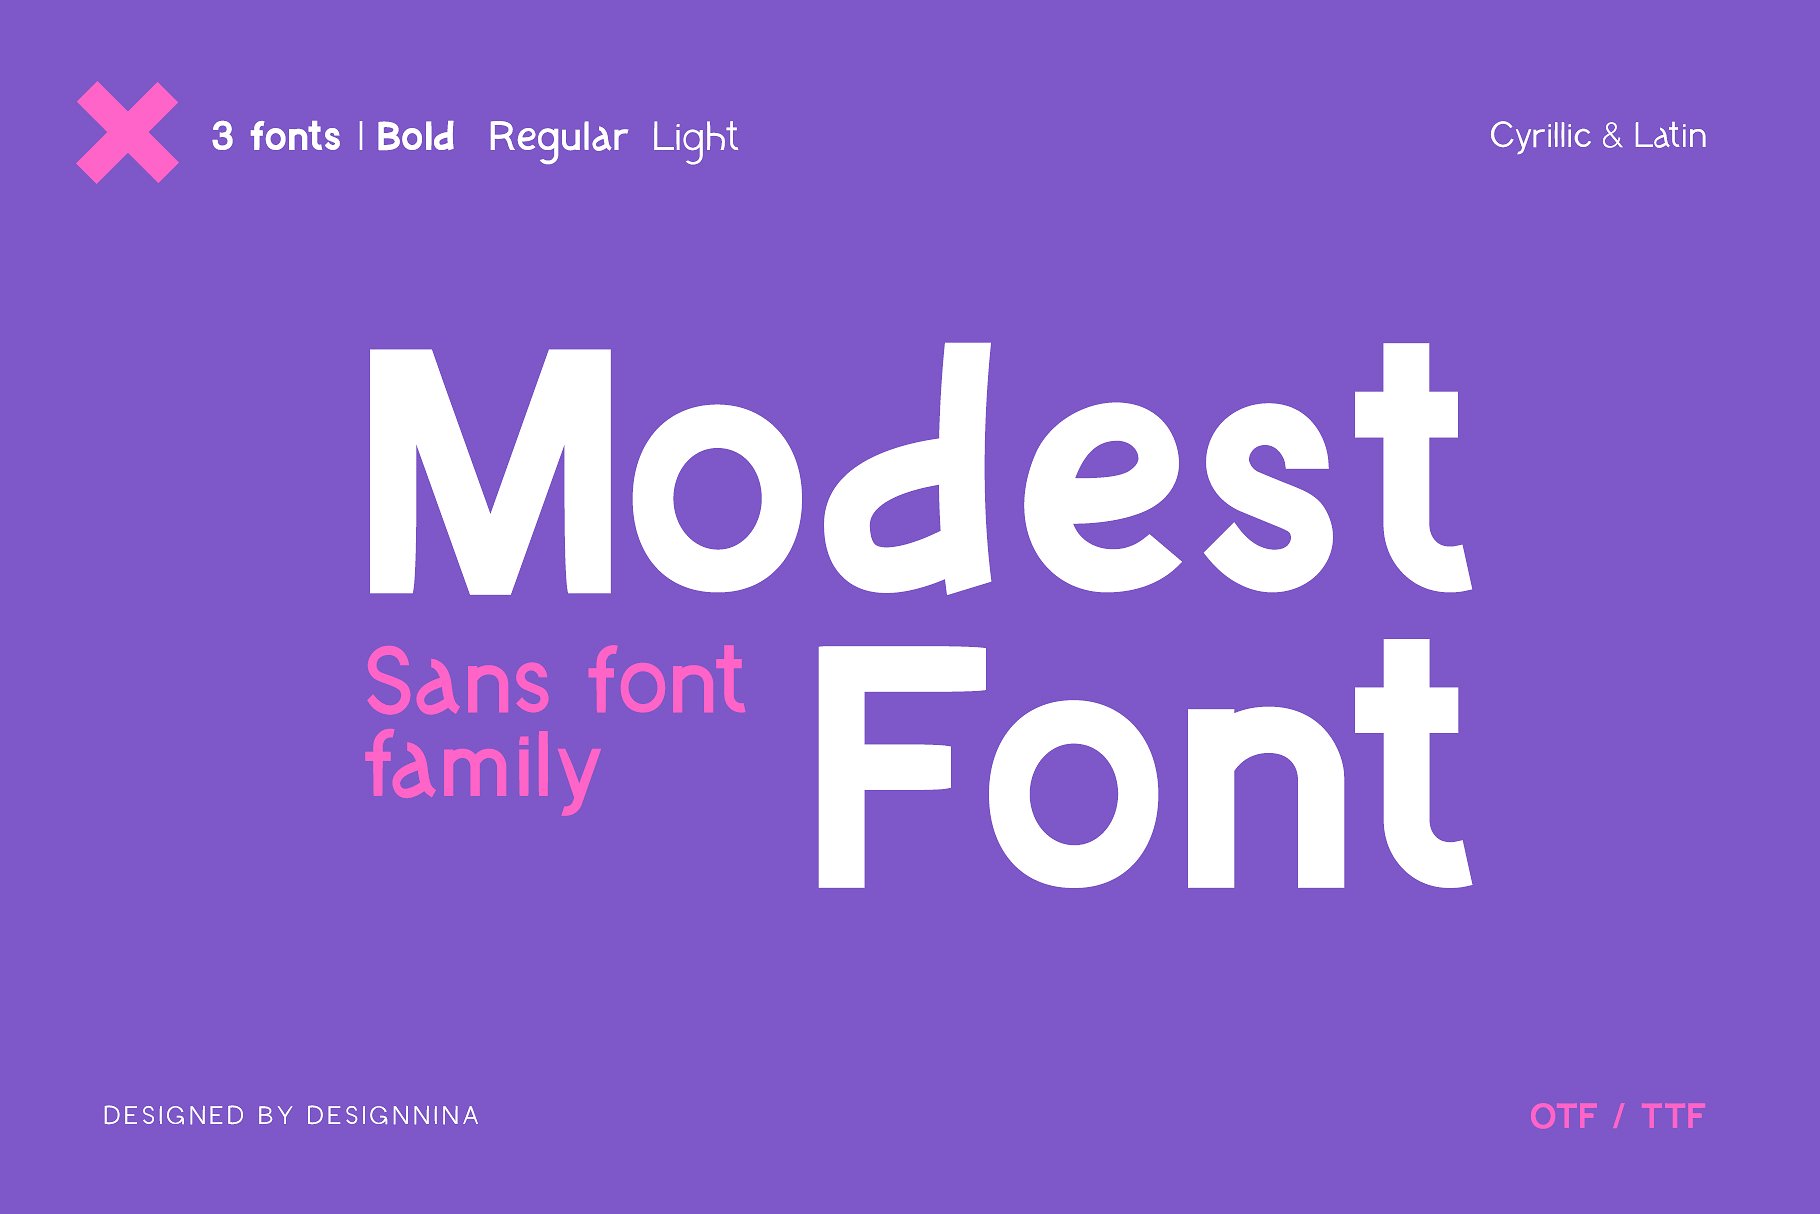 Ejemplo de fuente Modest Font Regular